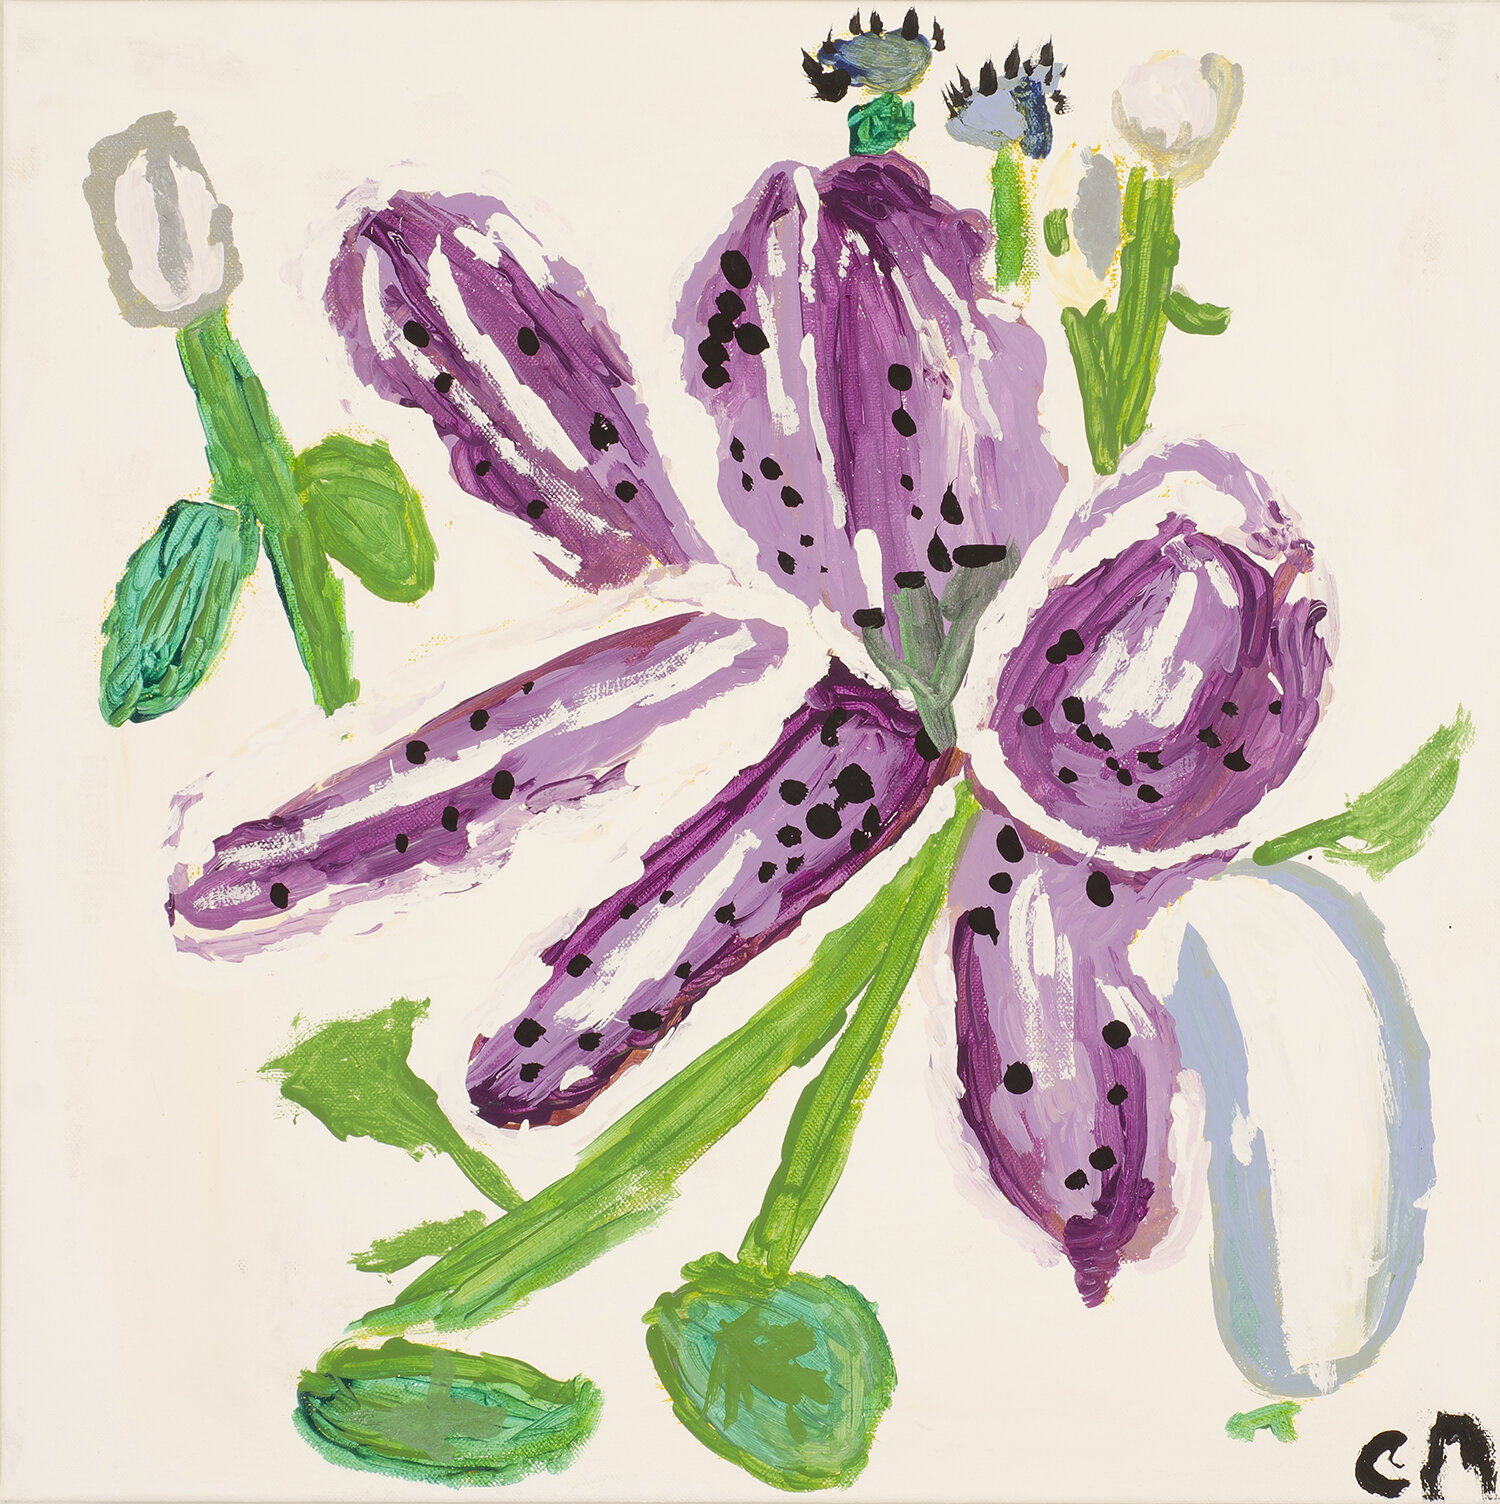 Chris Maveety, Flower in Bloom, 20” x 20”, acrylic on canvas